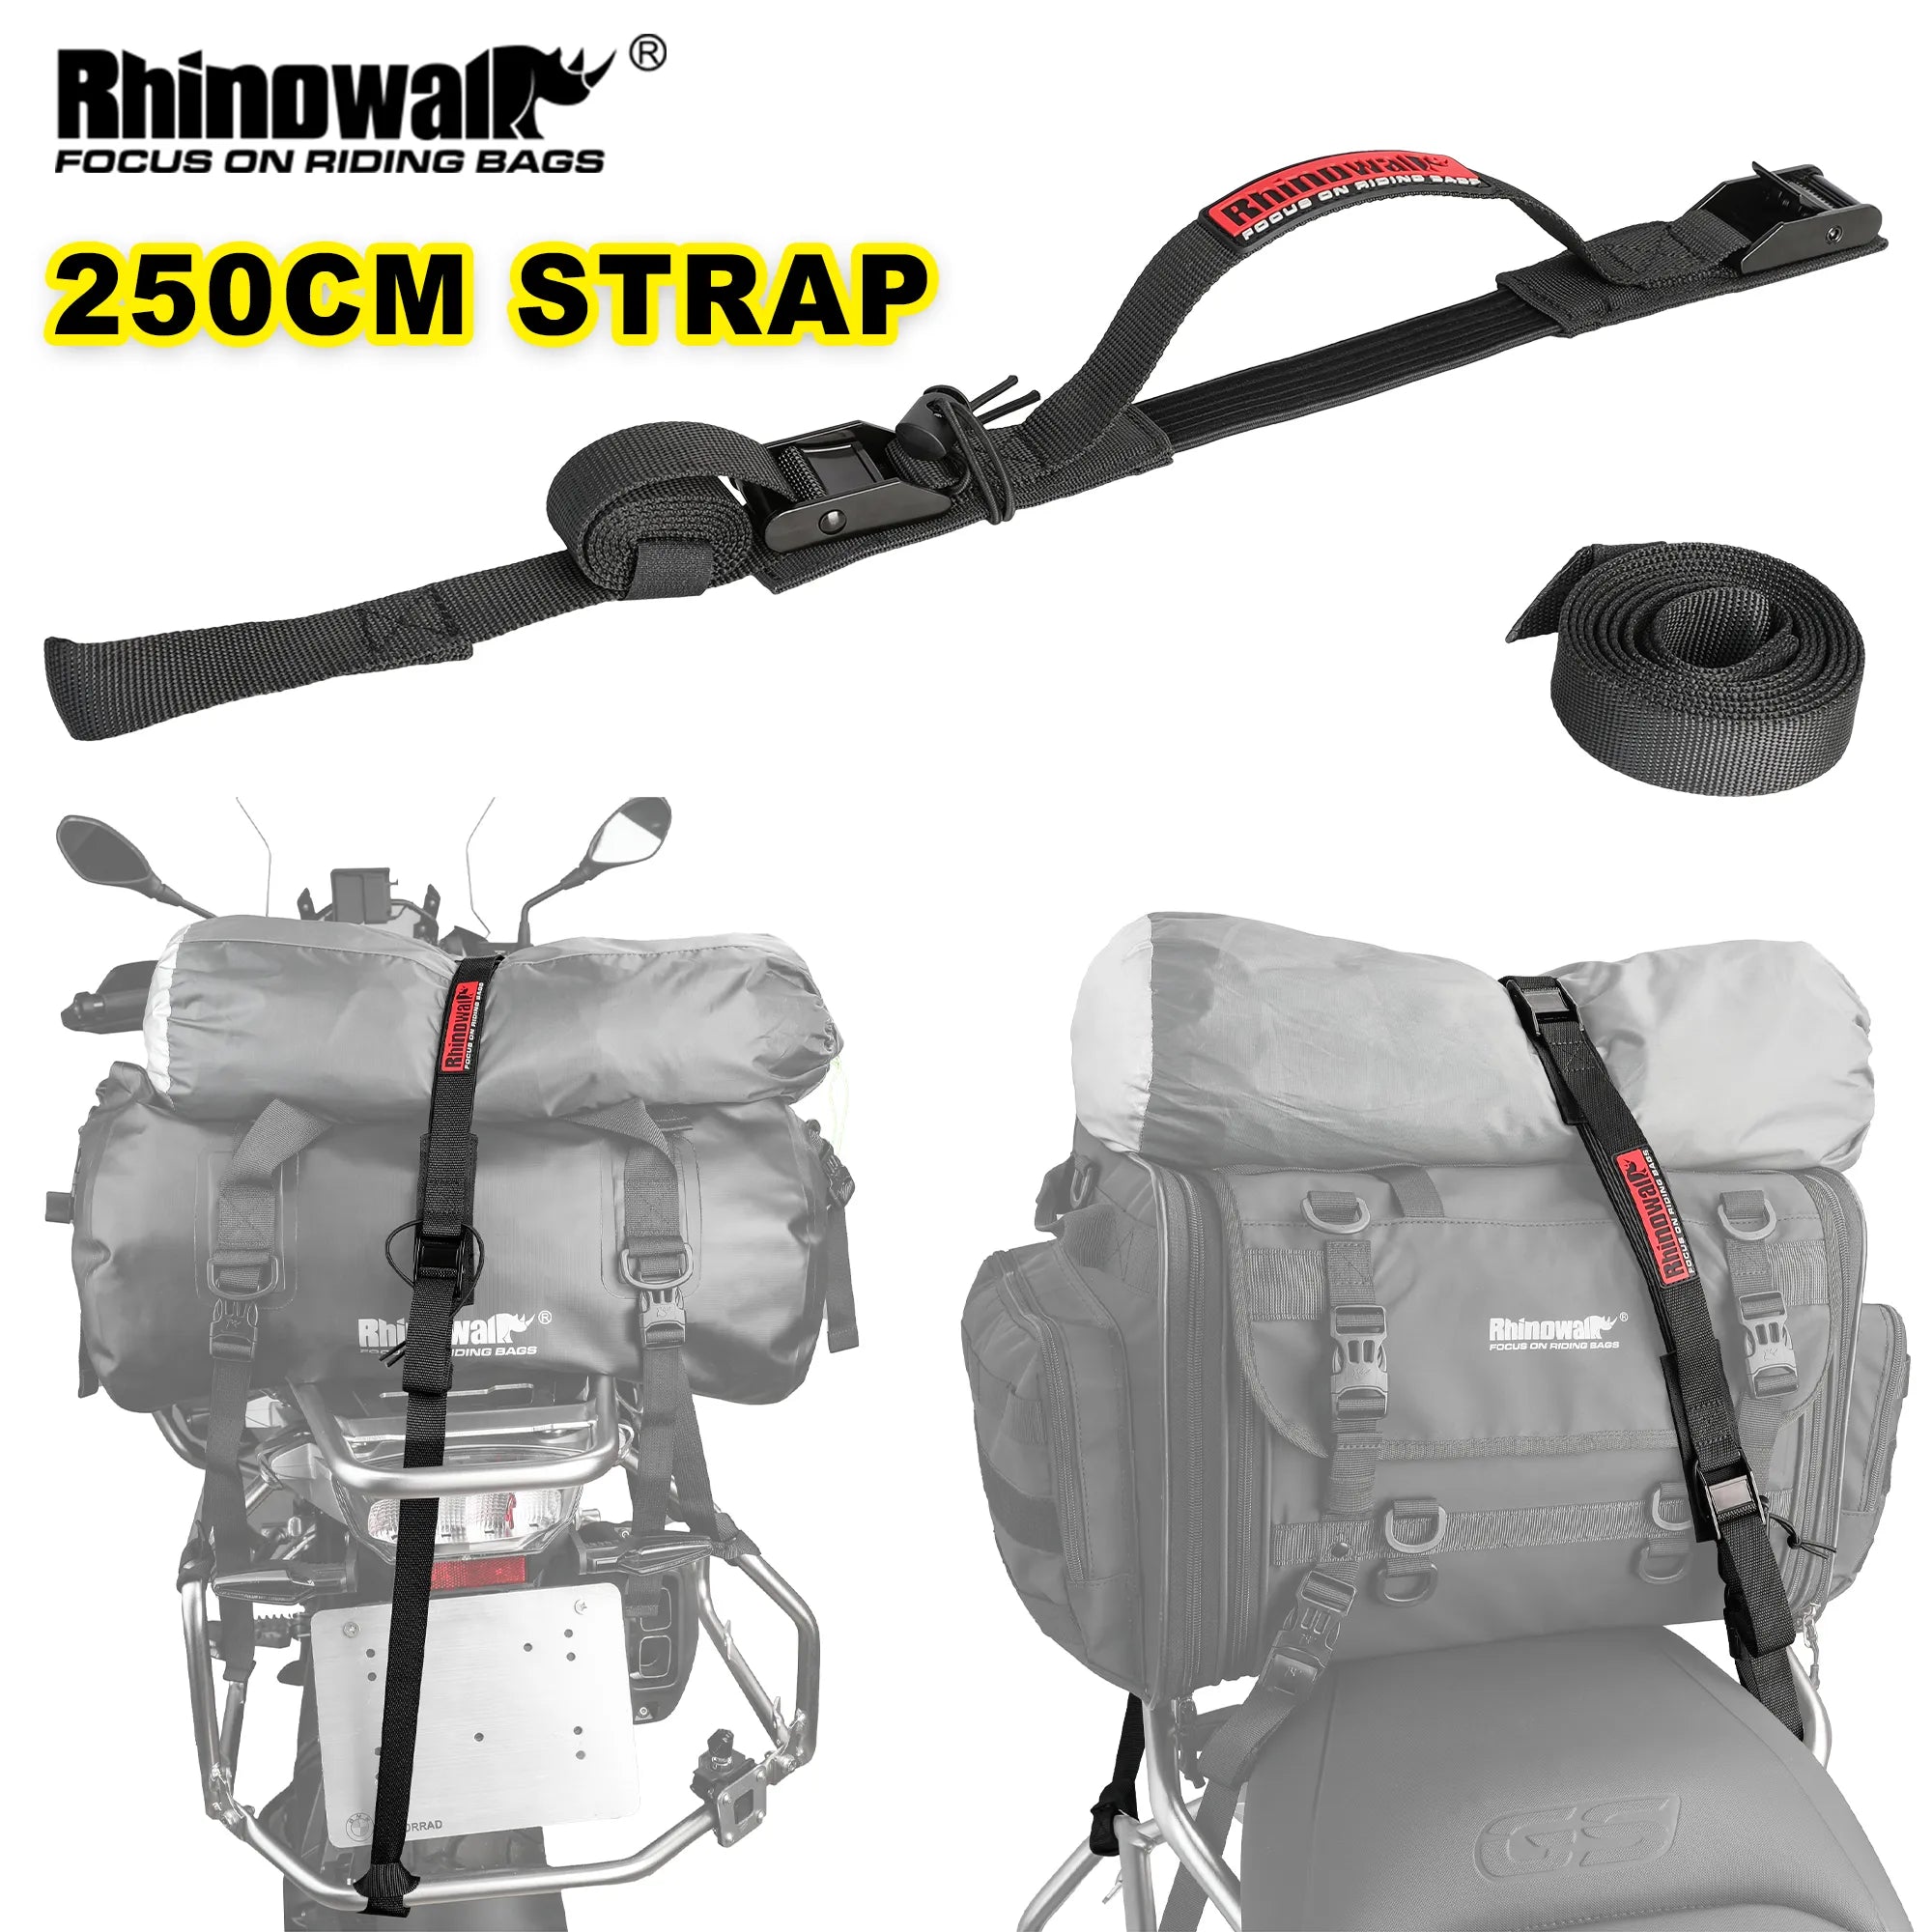 Rhinowalk Motorcycle Luggage Strap 2.5M Buckle Tie-Down Belt Cargo Straps for Motor Car Bike Eeinforced Strap With Cam Buckle